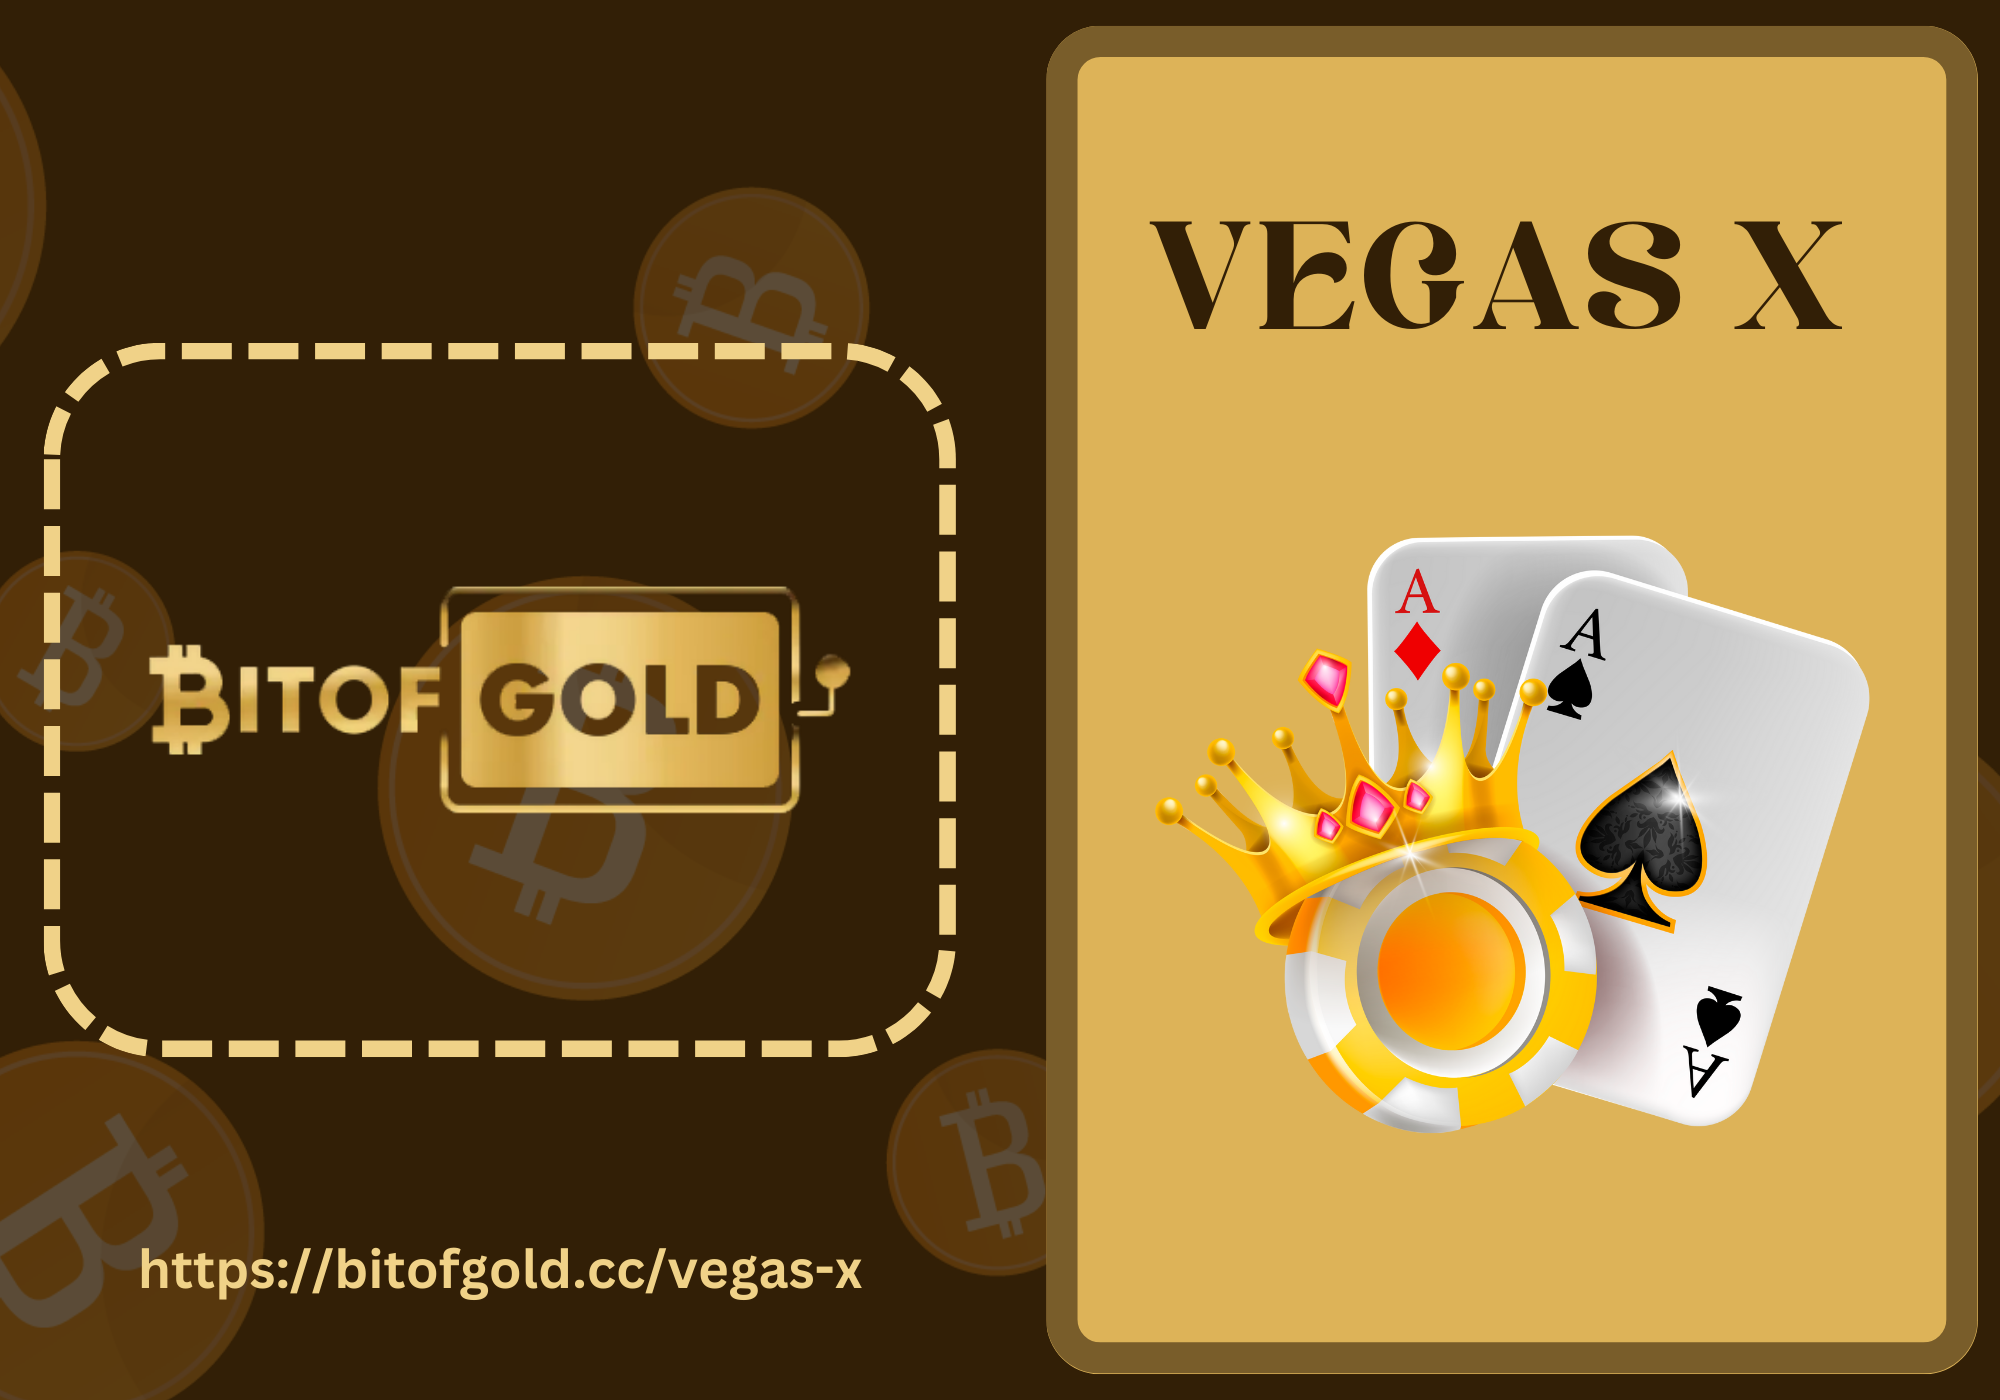 Vegas X Games: Your Winning Destination